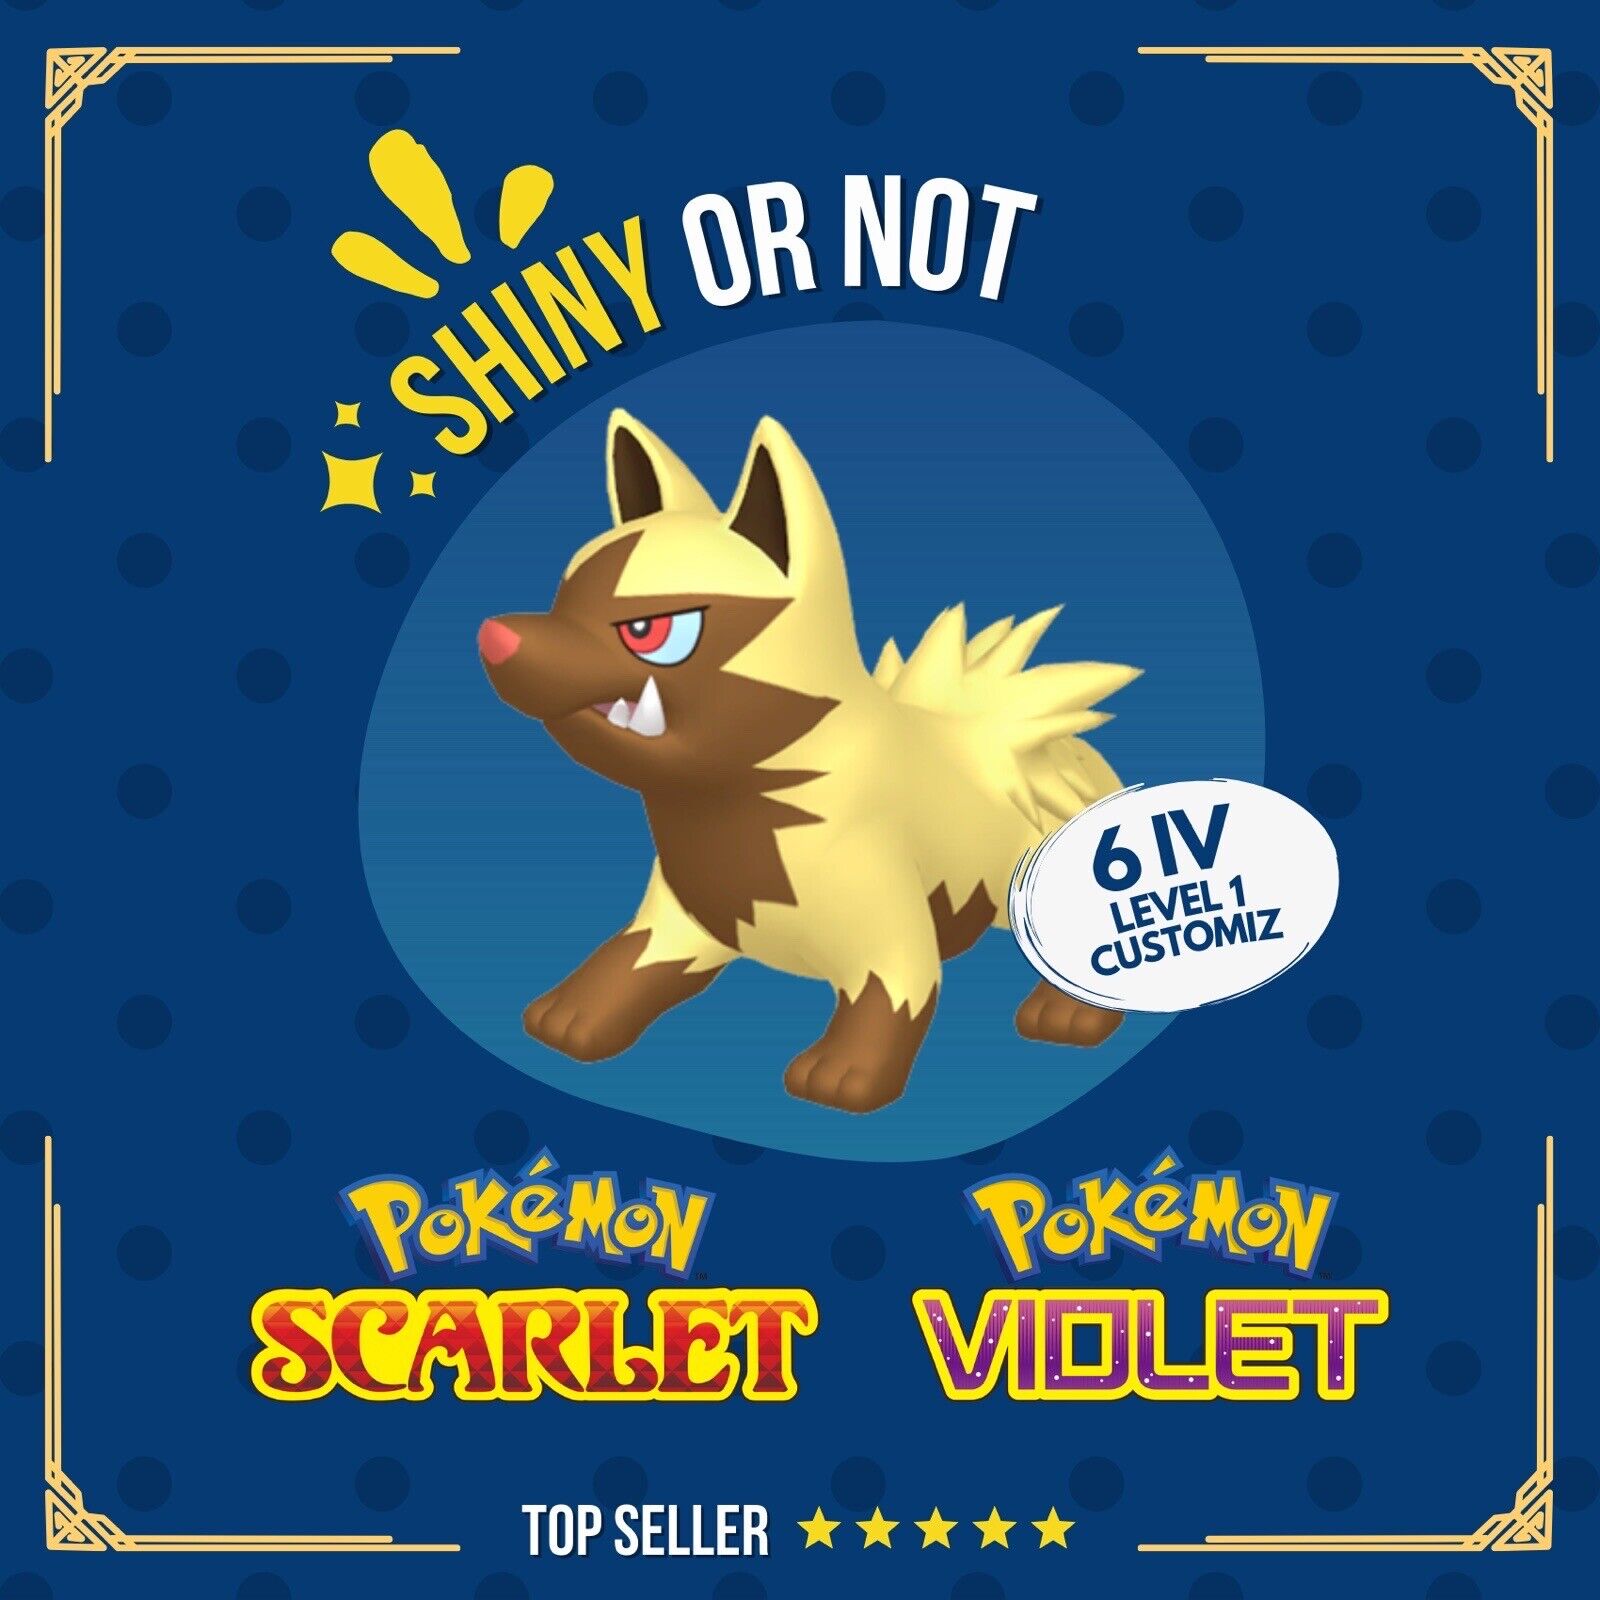 Poochyena Shiny or Non 6 IV Customizable Nature Level OT Pokémon Scarlet Violet by Shiny Living Dex | Shiny Living Dex